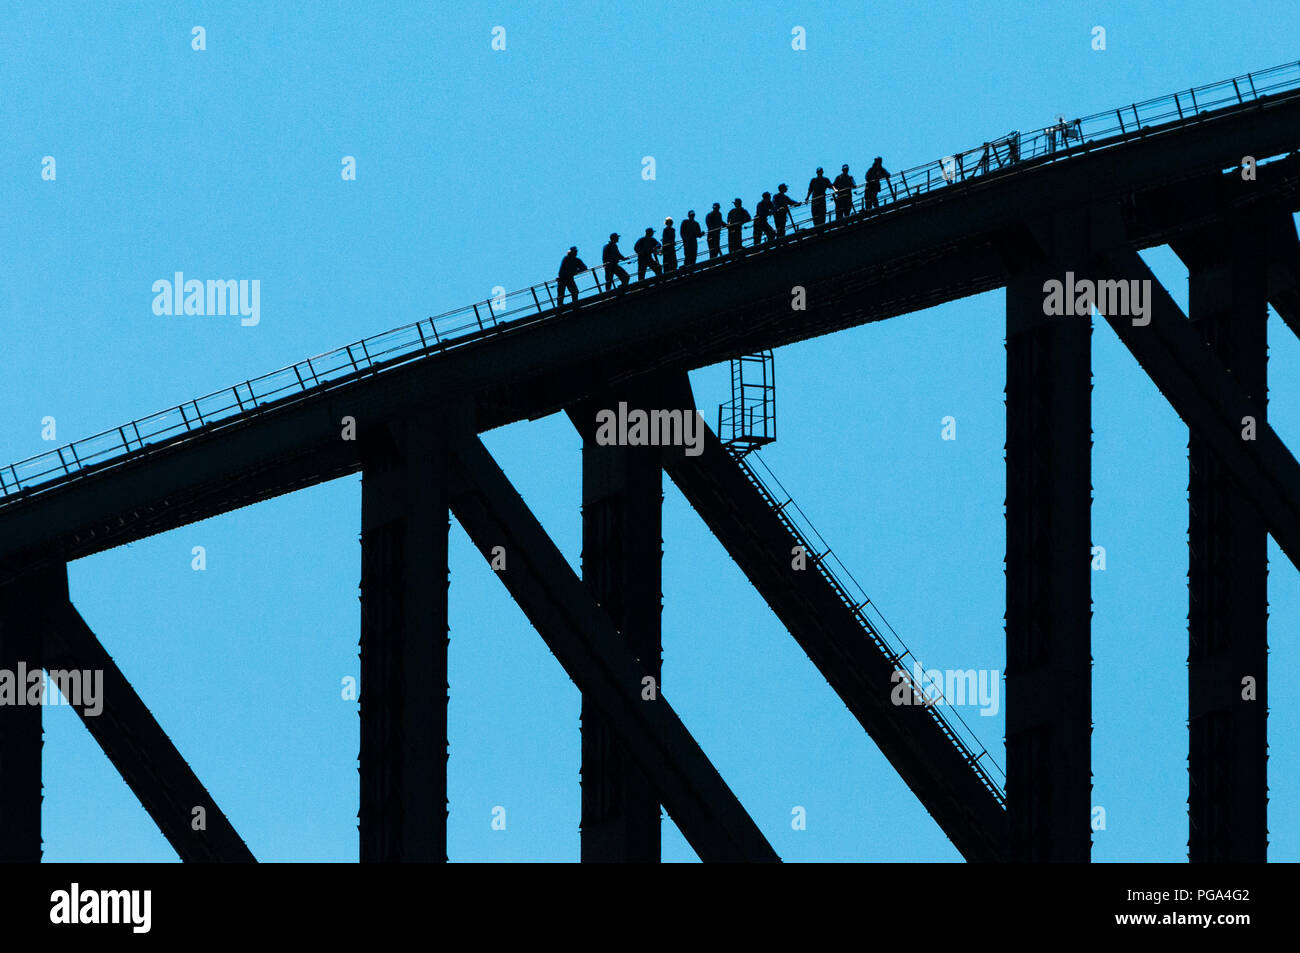 Group of people on Sydney's famous Harbour Bridge. Stock Photo